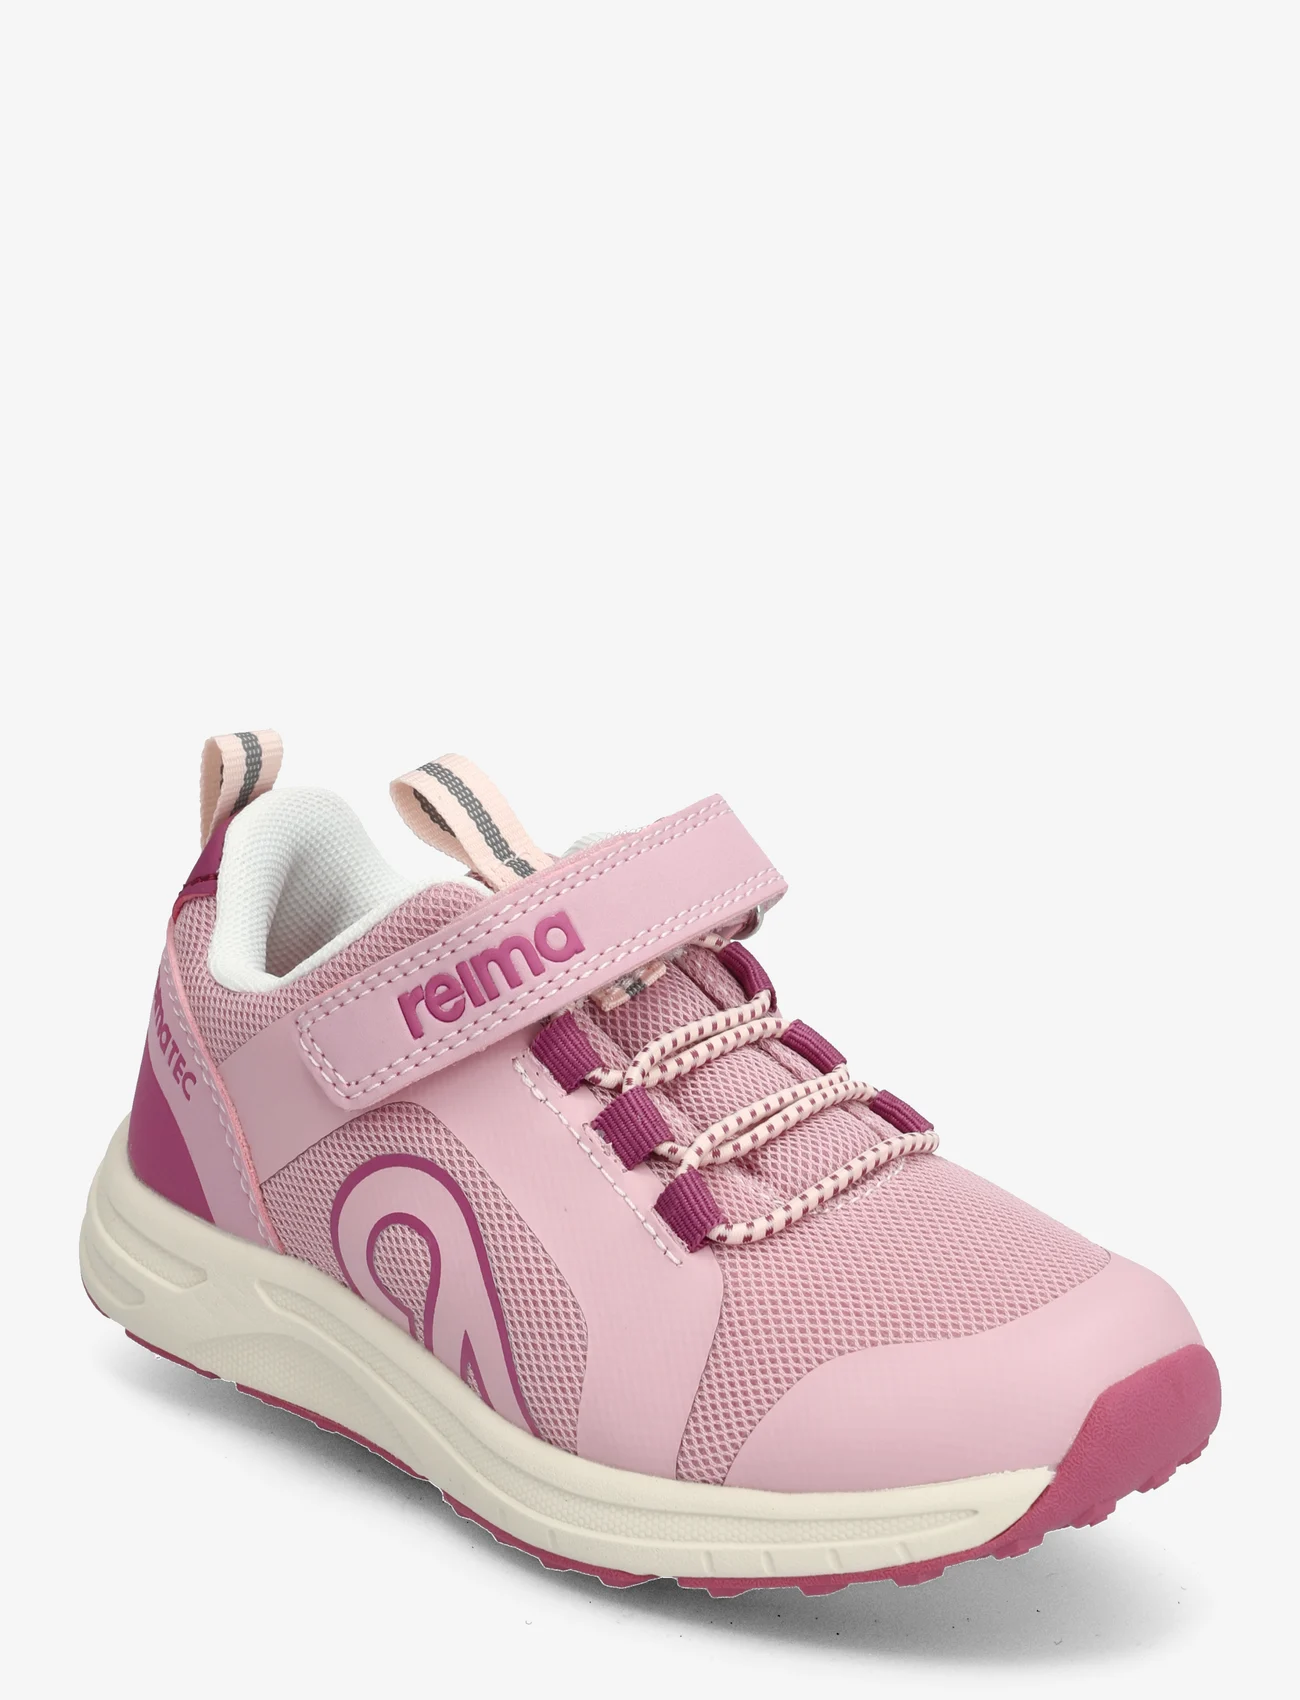 Reima - Reimatec shoes, Enkka - barn - grey pink - 0